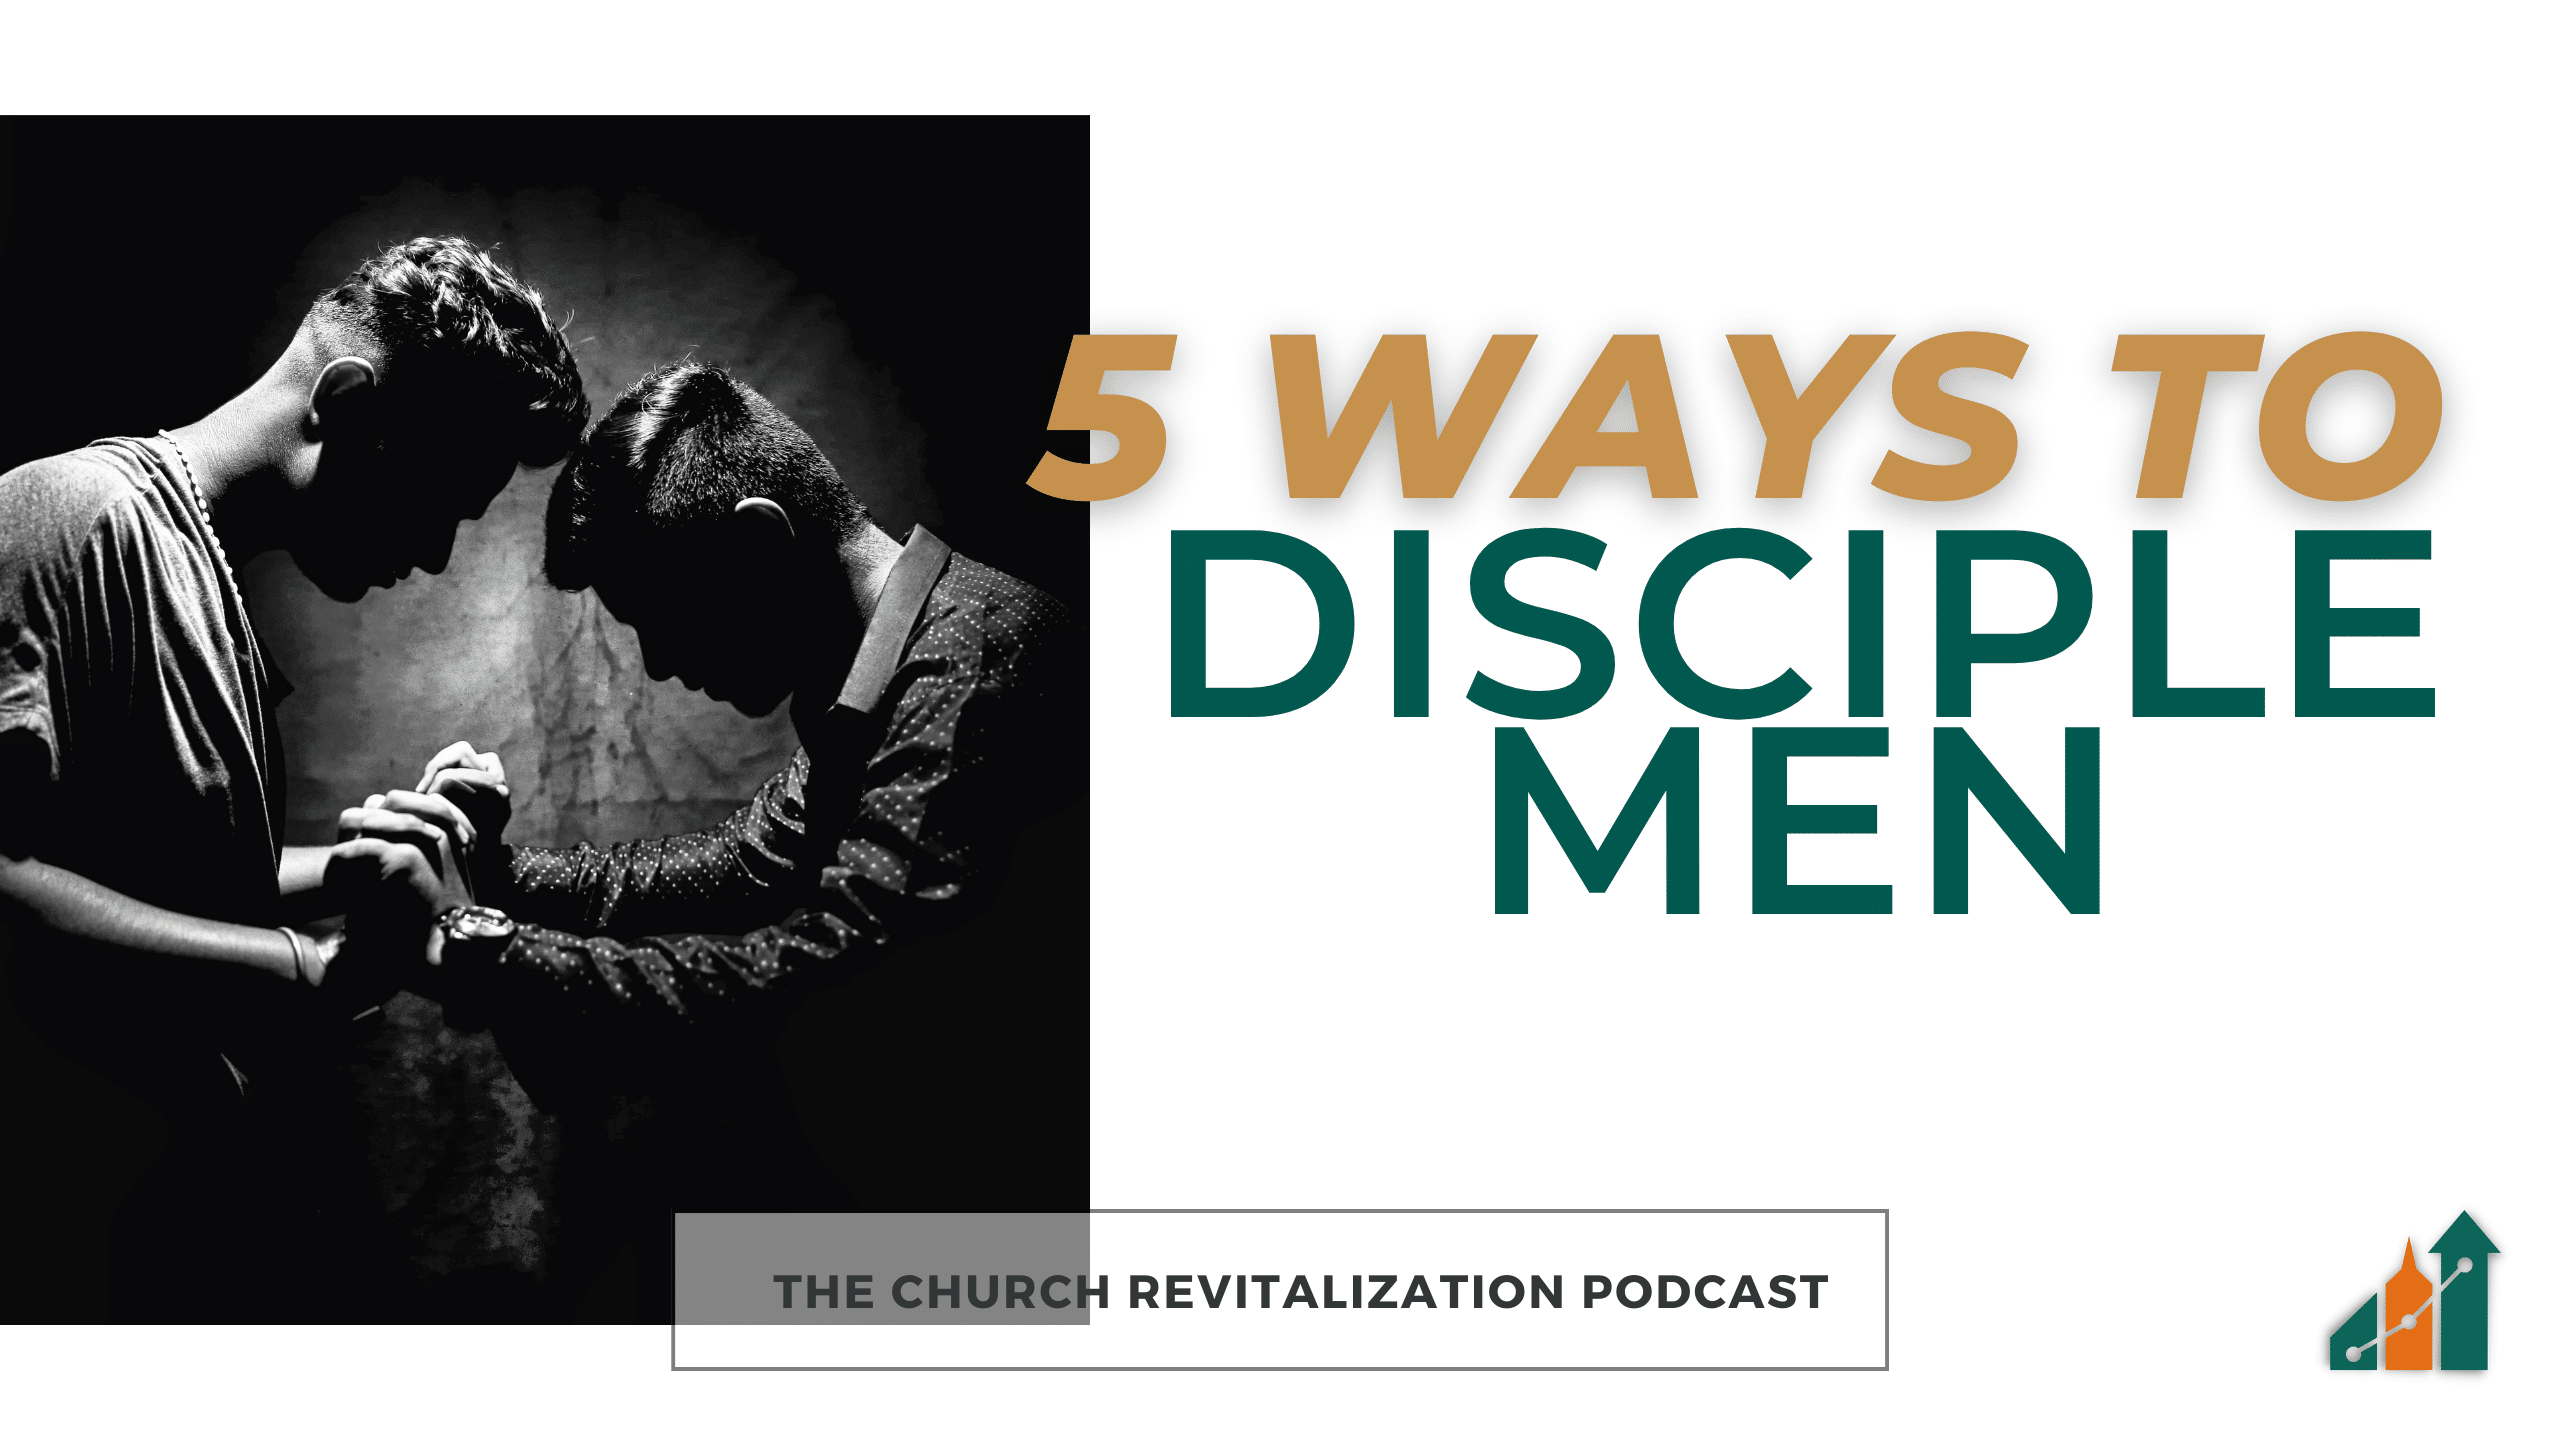 Five Ways to Disciple Men